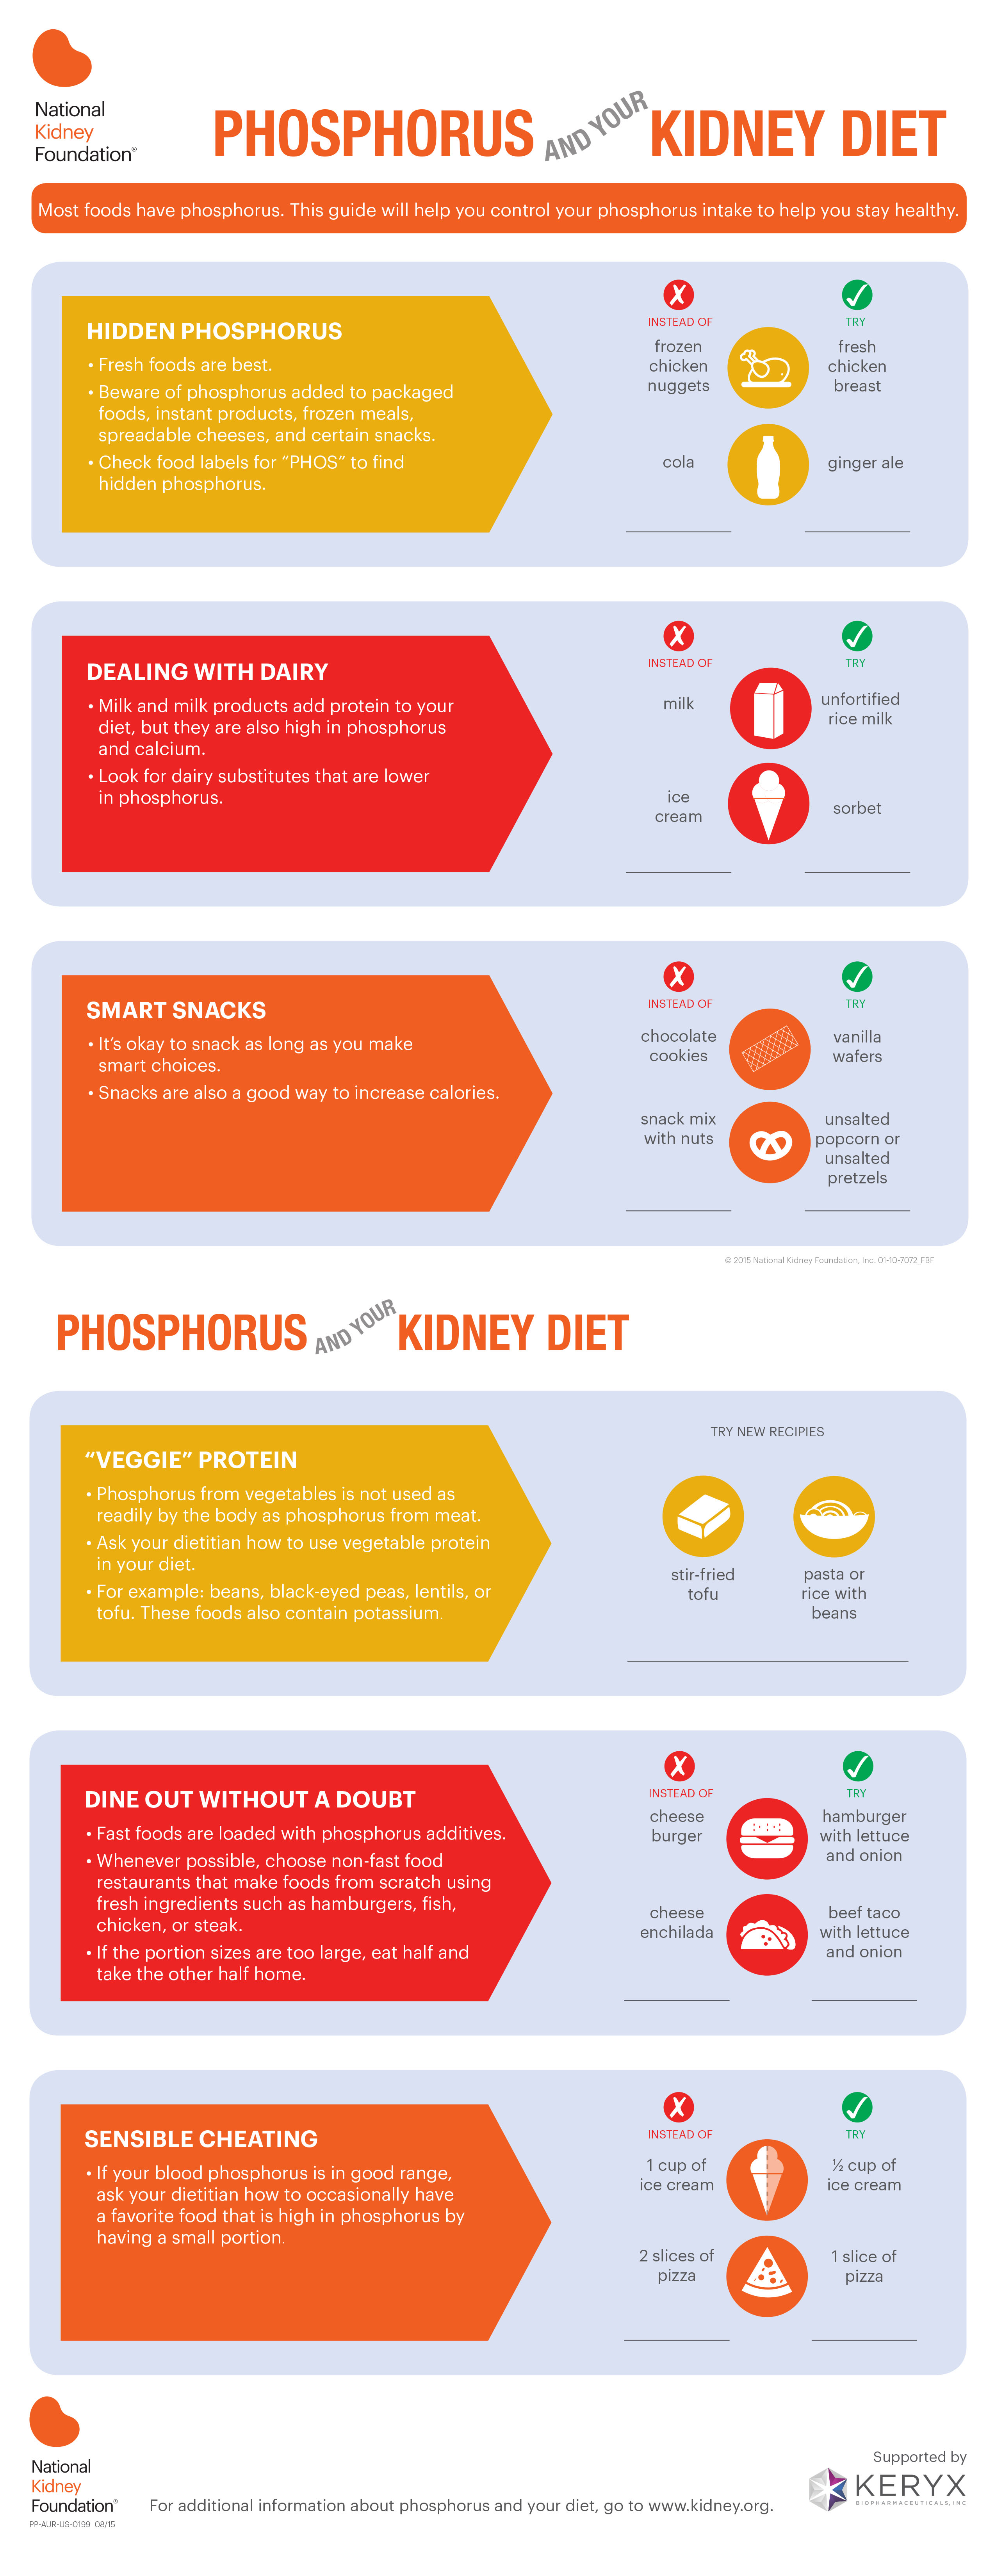 Phosphorus and your Kidney Diet